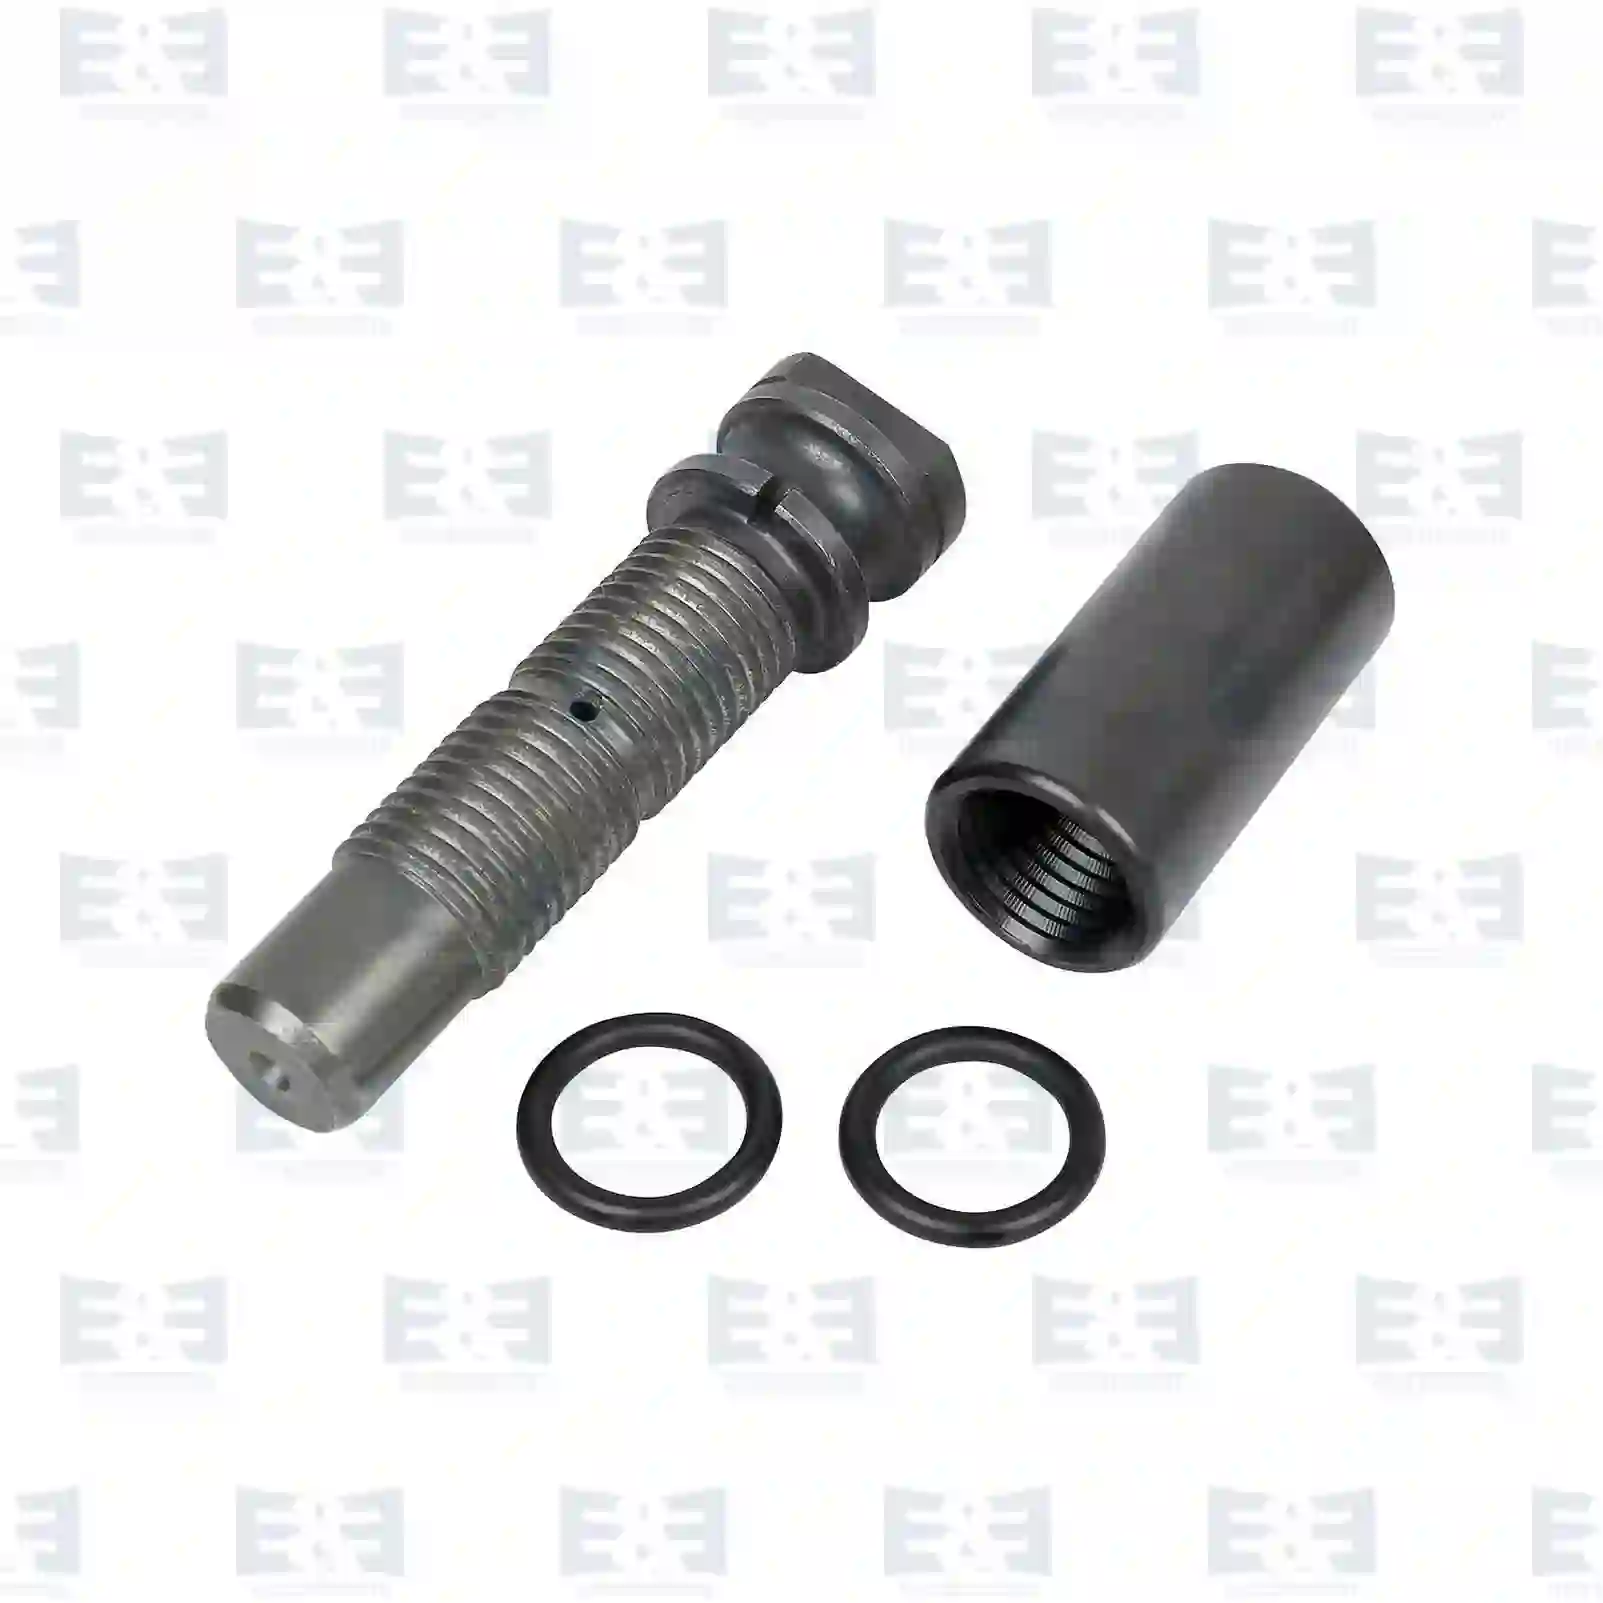  Spring bolt kit || E&E Truck Spare Parts | Truck Spare Parts, Auotomotive Spare Parts